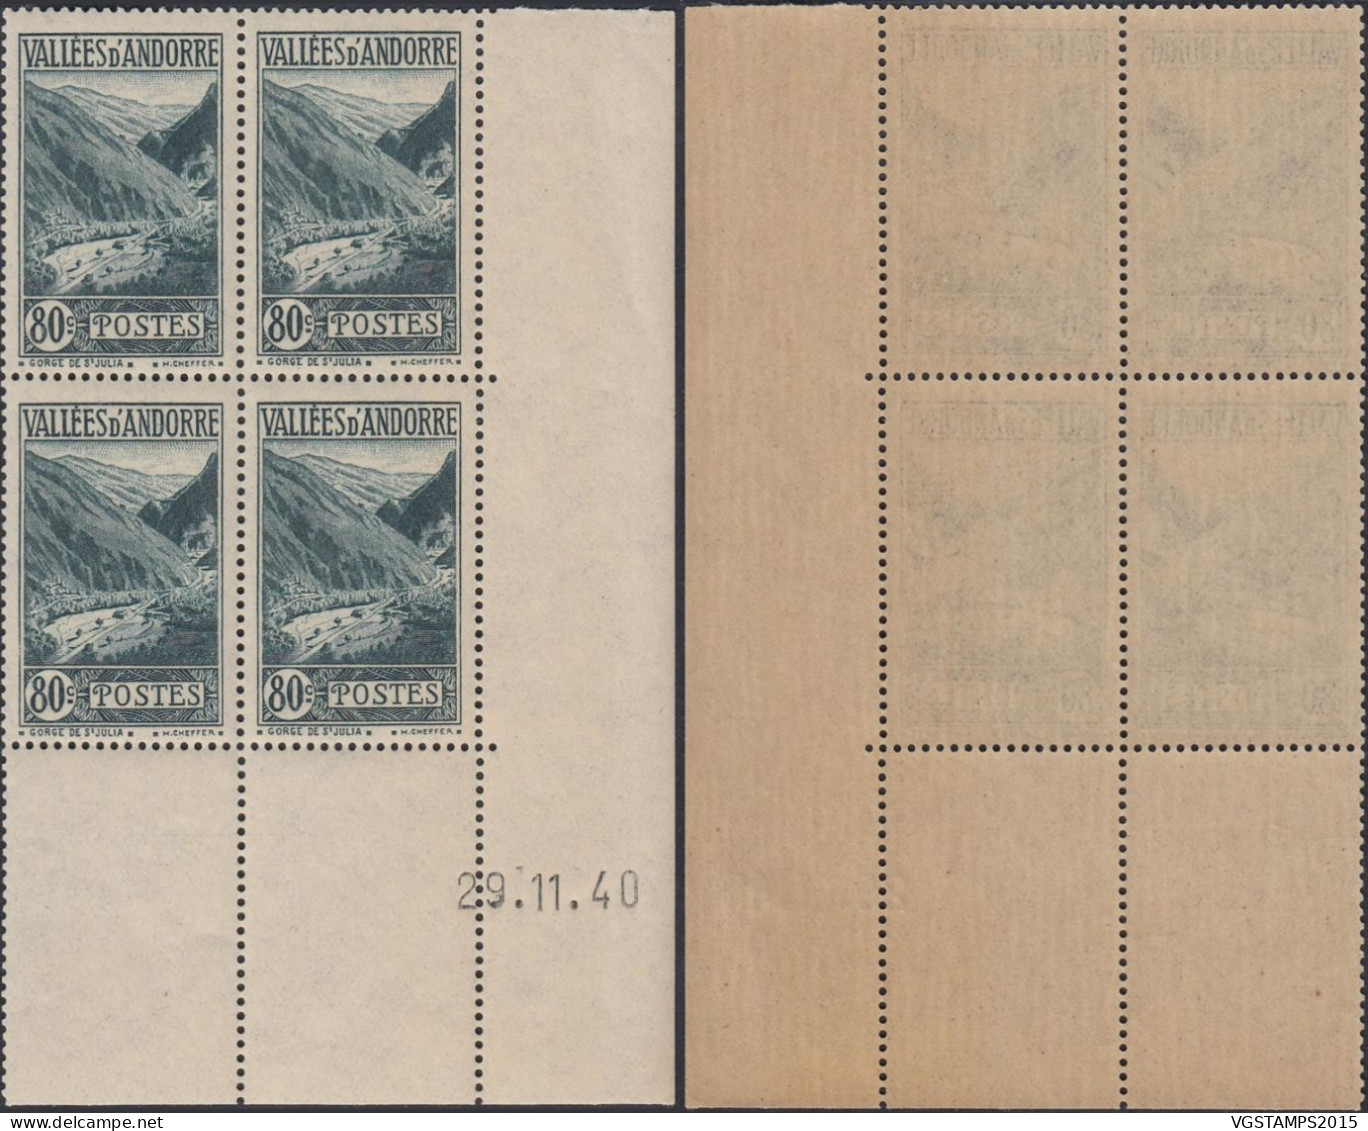 Andorre 1941 - Andorre Française - Timbres Neufs. Yvert Nr.: 72. Michel Nr.: 77. Coin Daté: 29/11/40.... (EB) AR-02068 - Nuovi